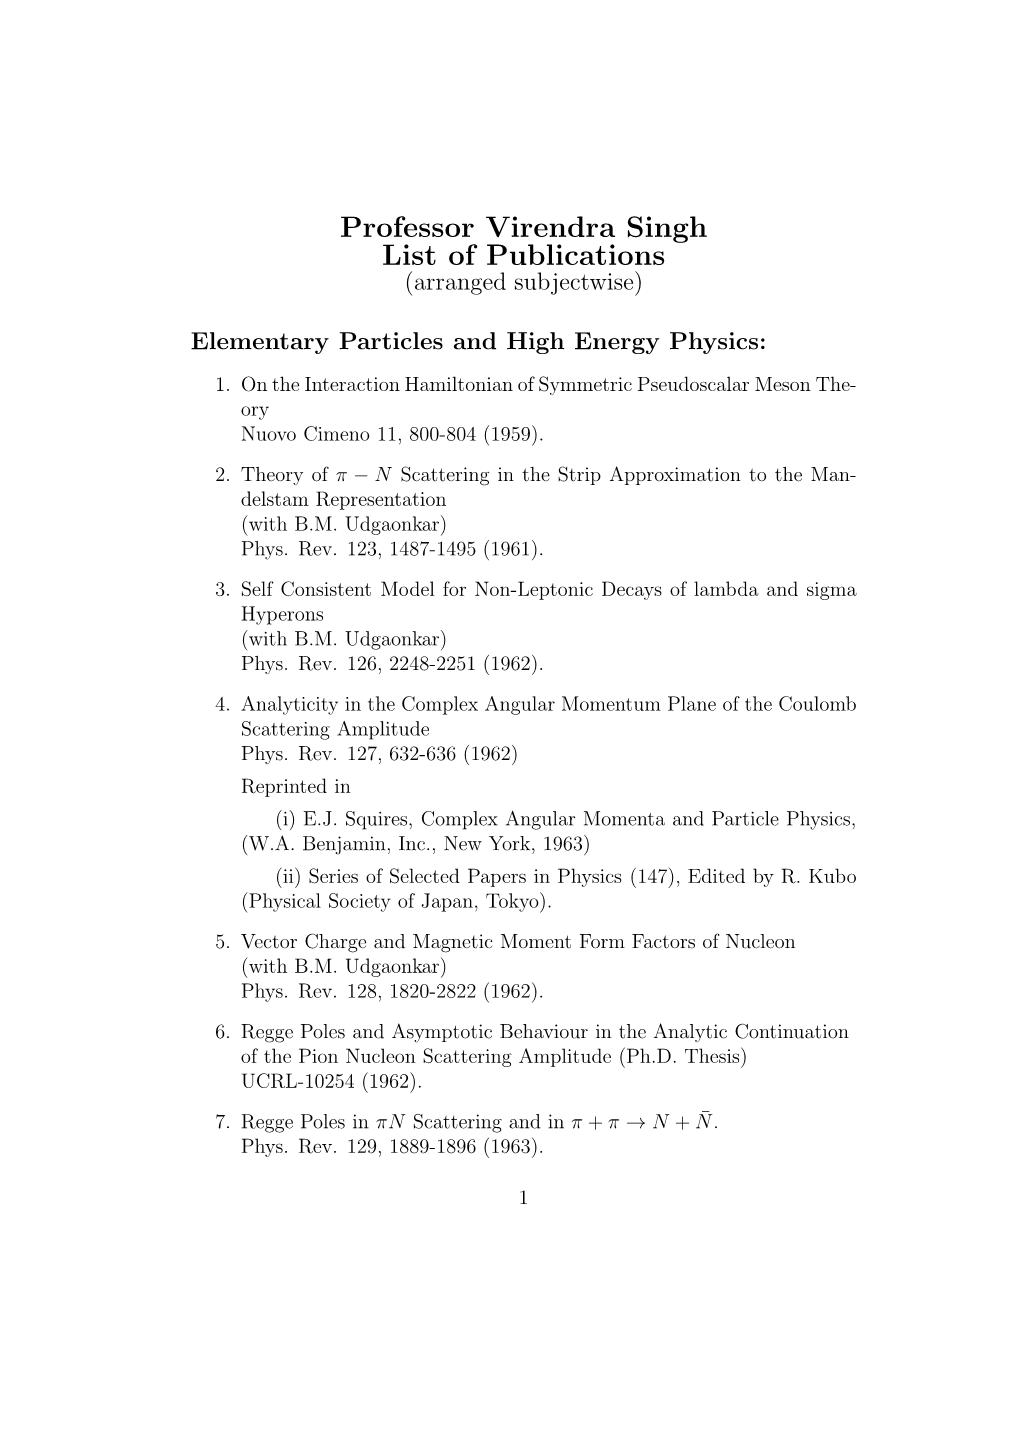 Professor Virendra Singh List of Publications (Arranged Subjectwise)